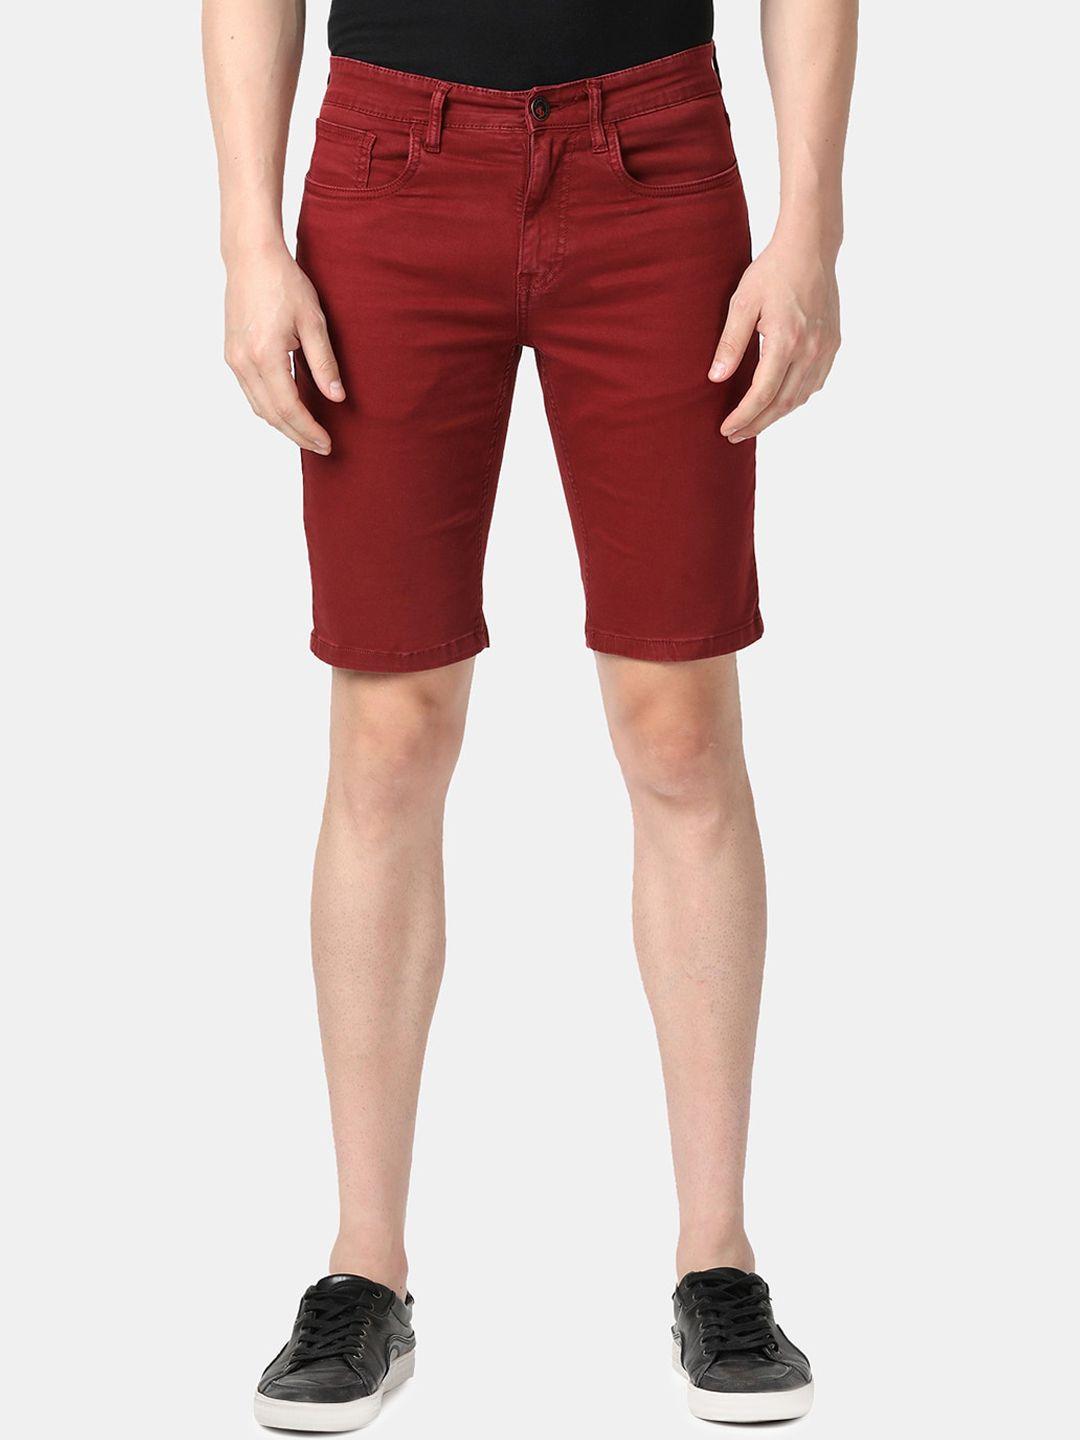 Llak Jeans Men Red Slim Fit Denim Shorts